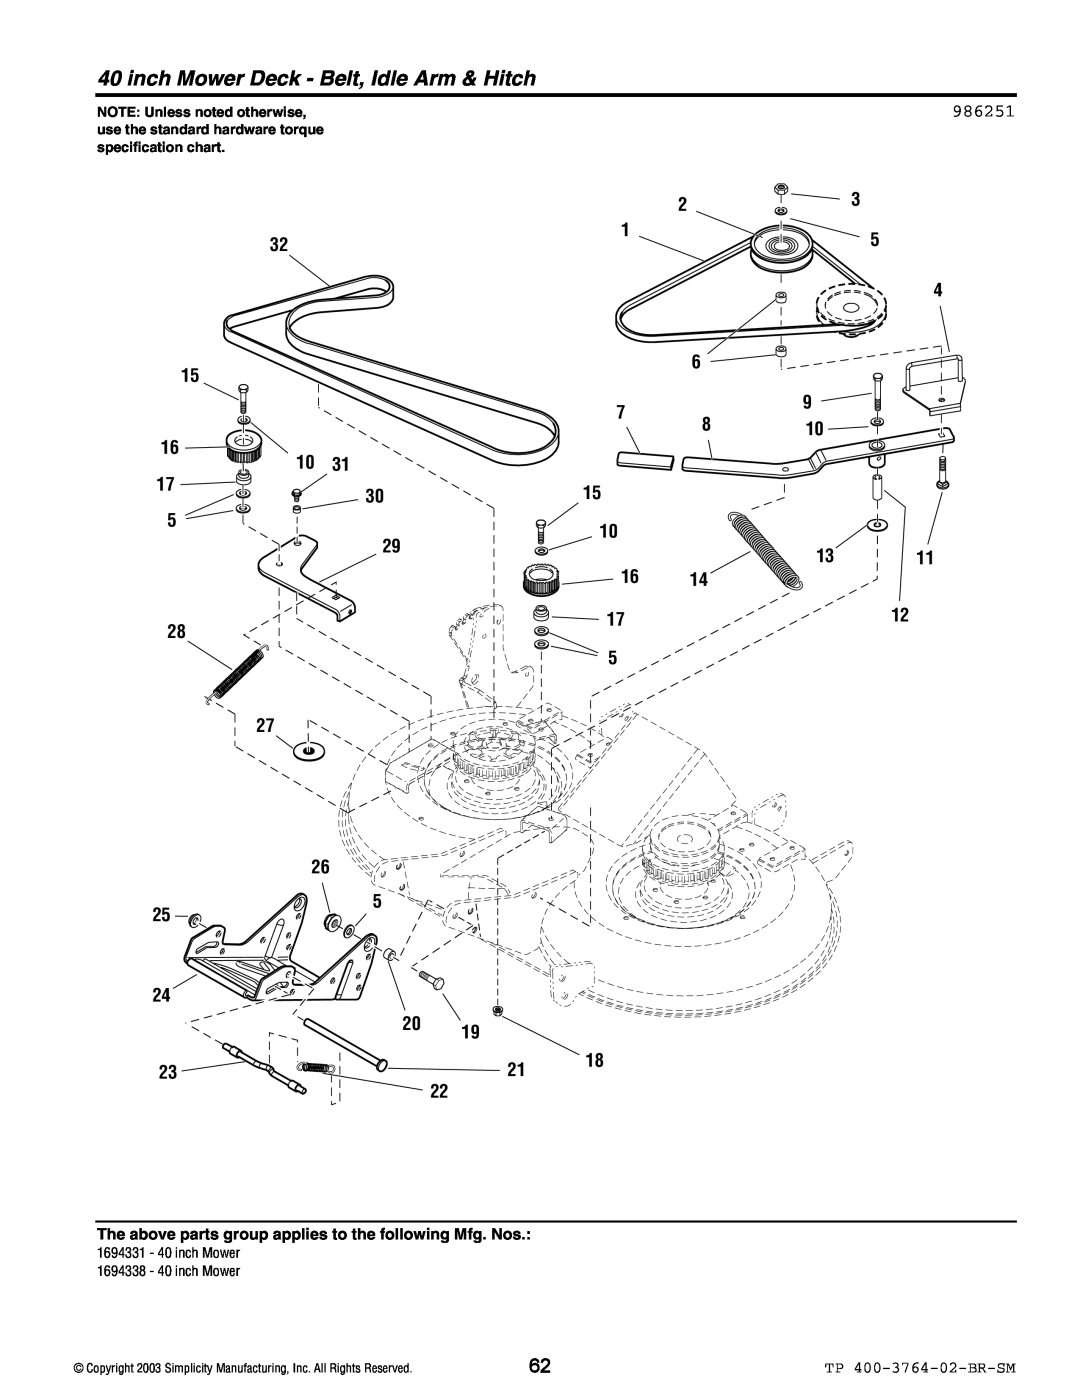 Simplicity Baron / 2400 manual inch Mower Deck - Belt, Idle Arm & Hitch, 986251, TP 400-3764-02-BR-SM 